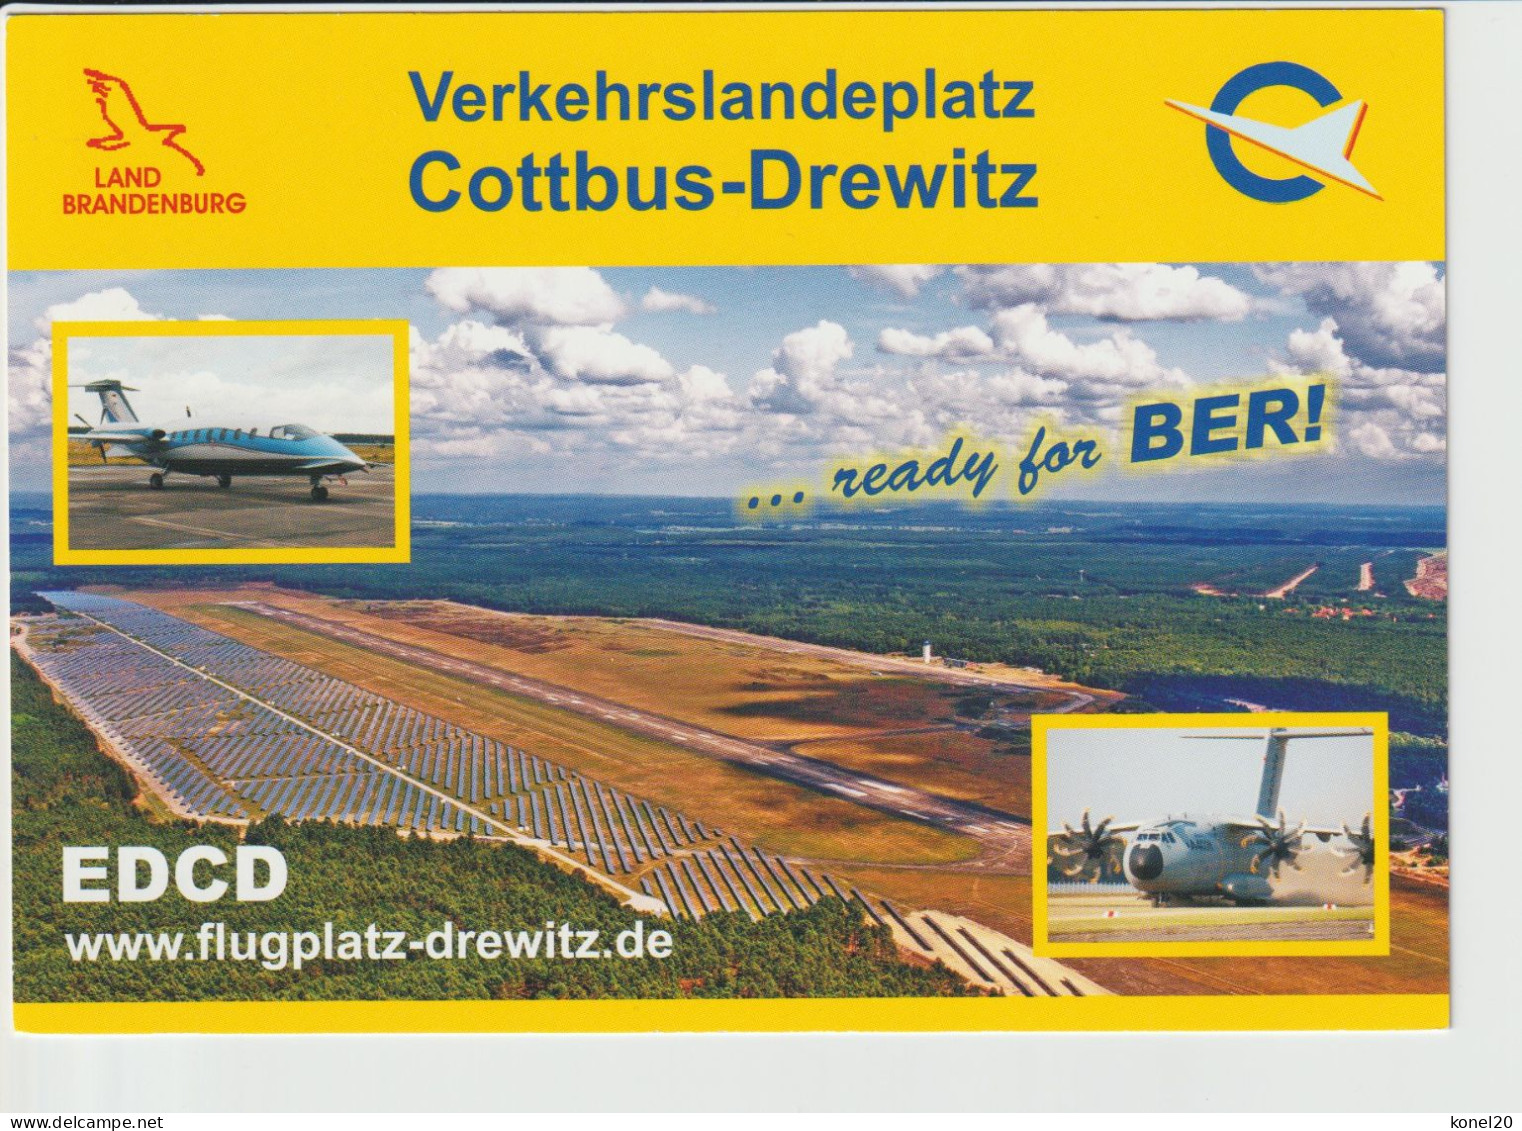 Promotioncard Verkehrlandeplatz Cottbus-Drewitz - 1919-1938: Interbellum